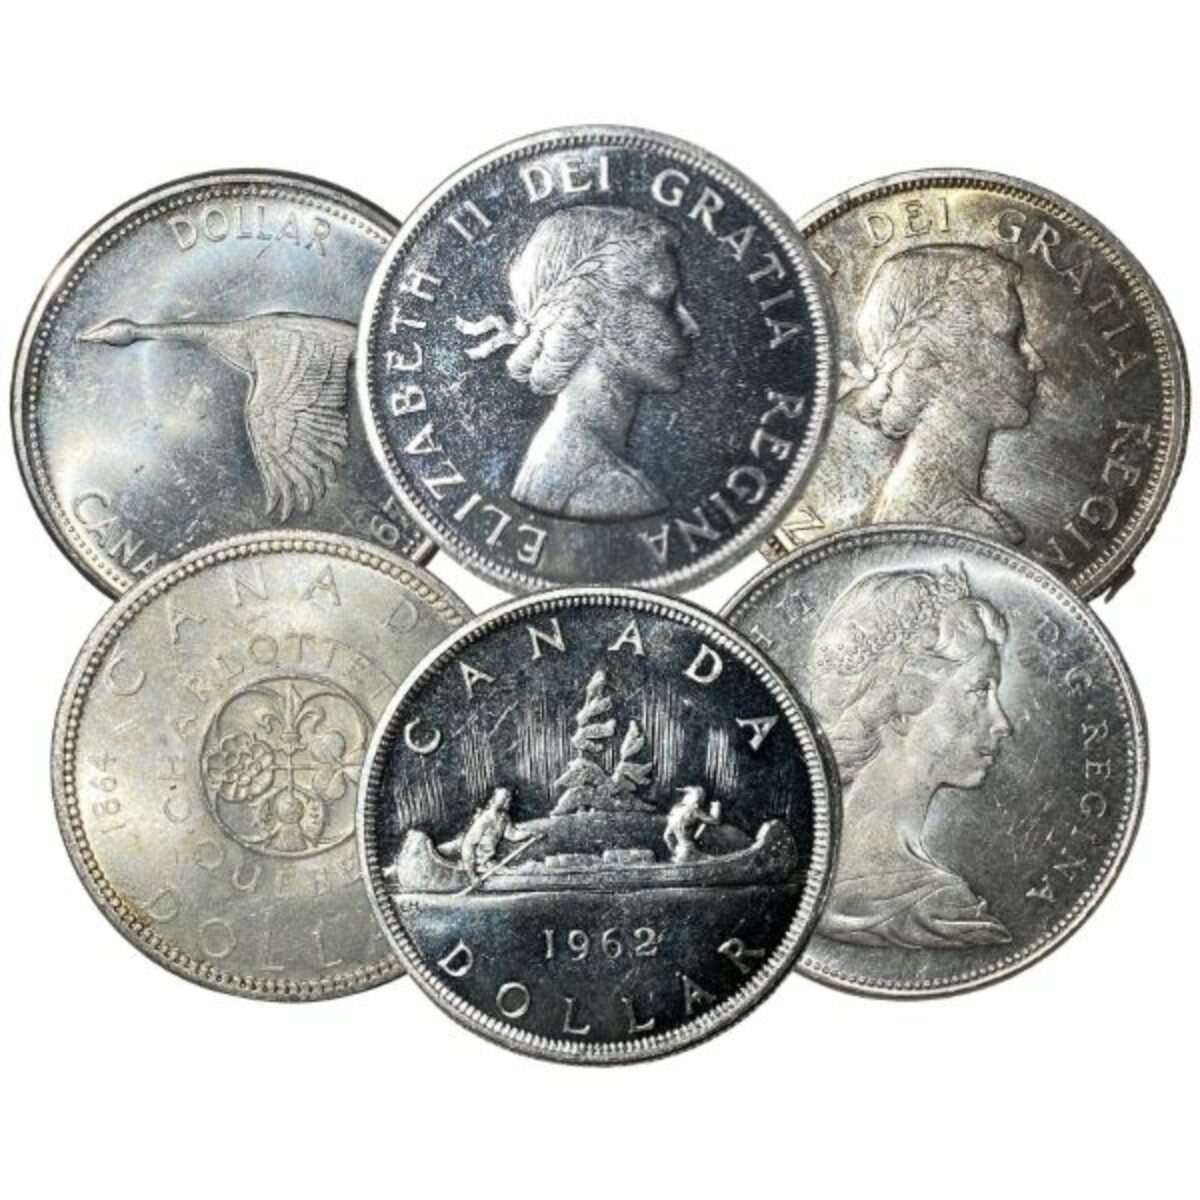 1965  Canadian Silver Dollar super details 80% silver 